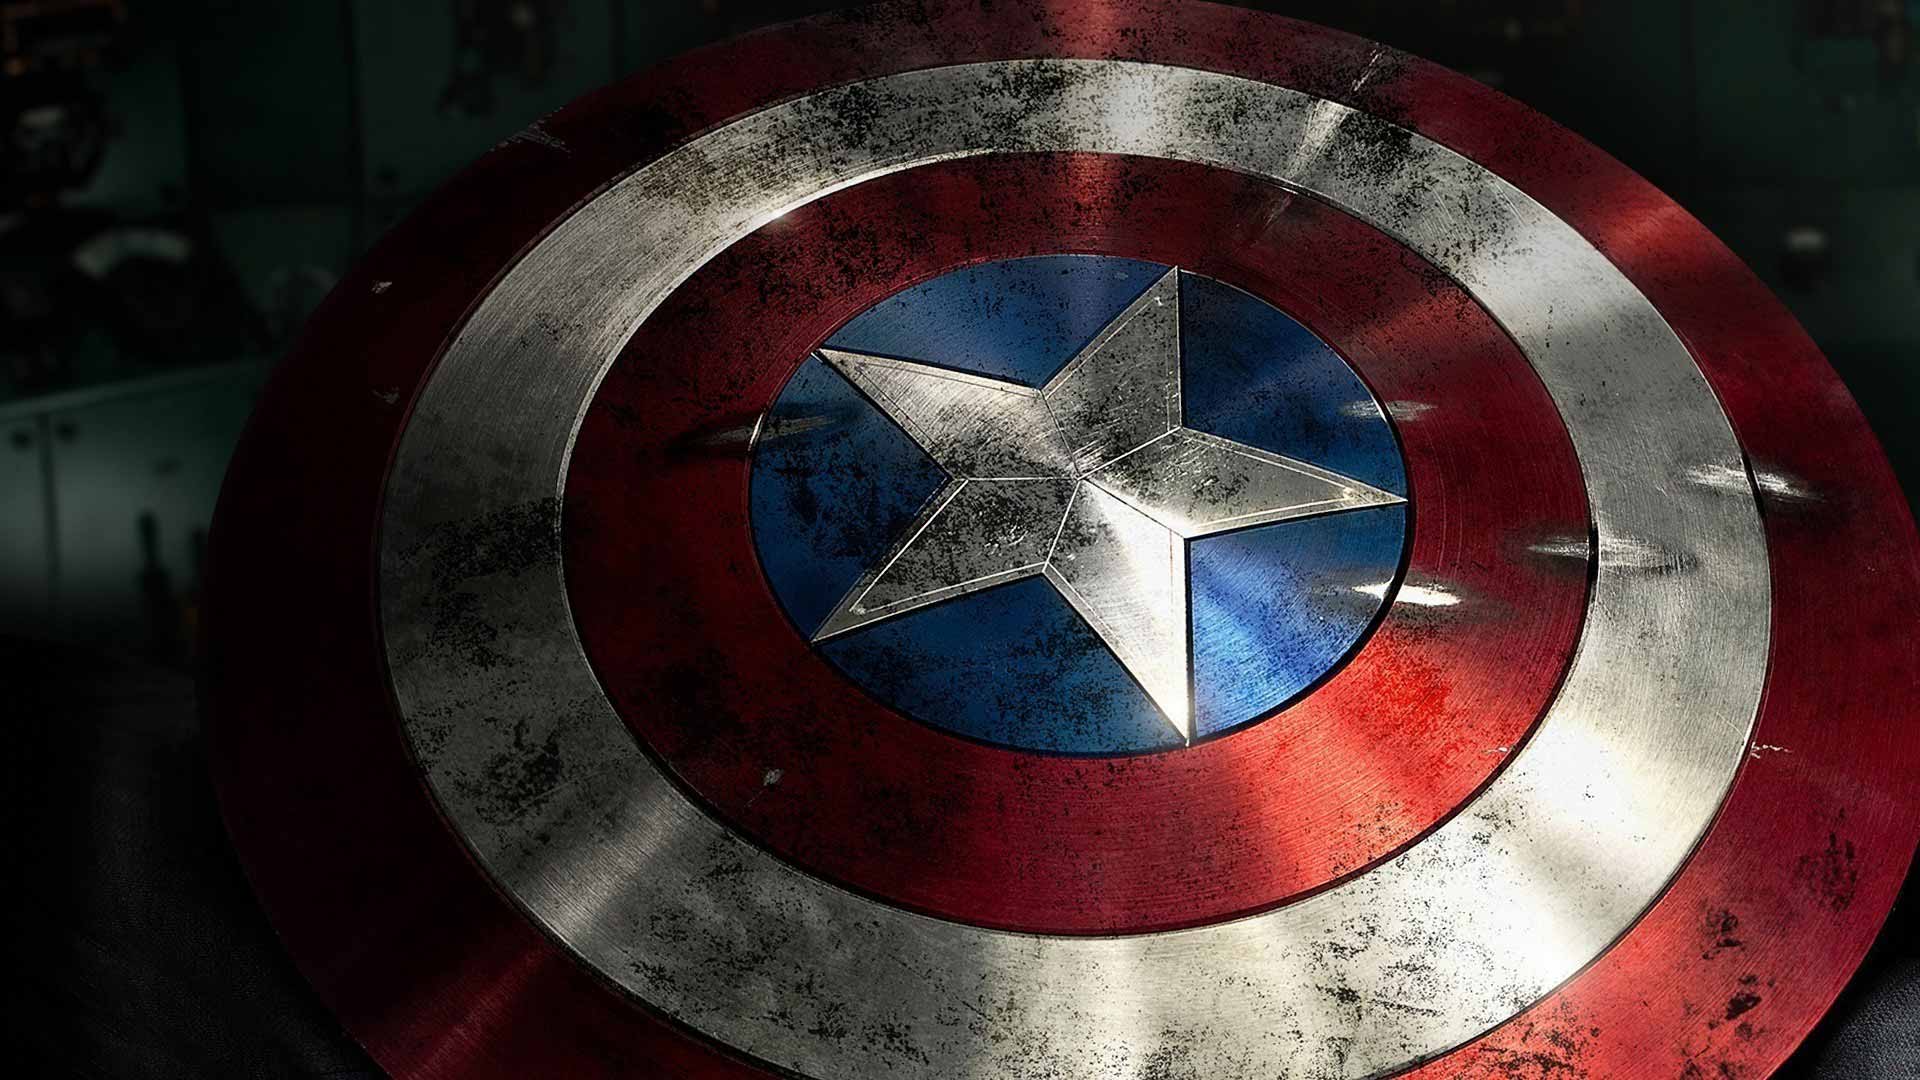 Production Begins on Marvel’s Captain America: Civil War